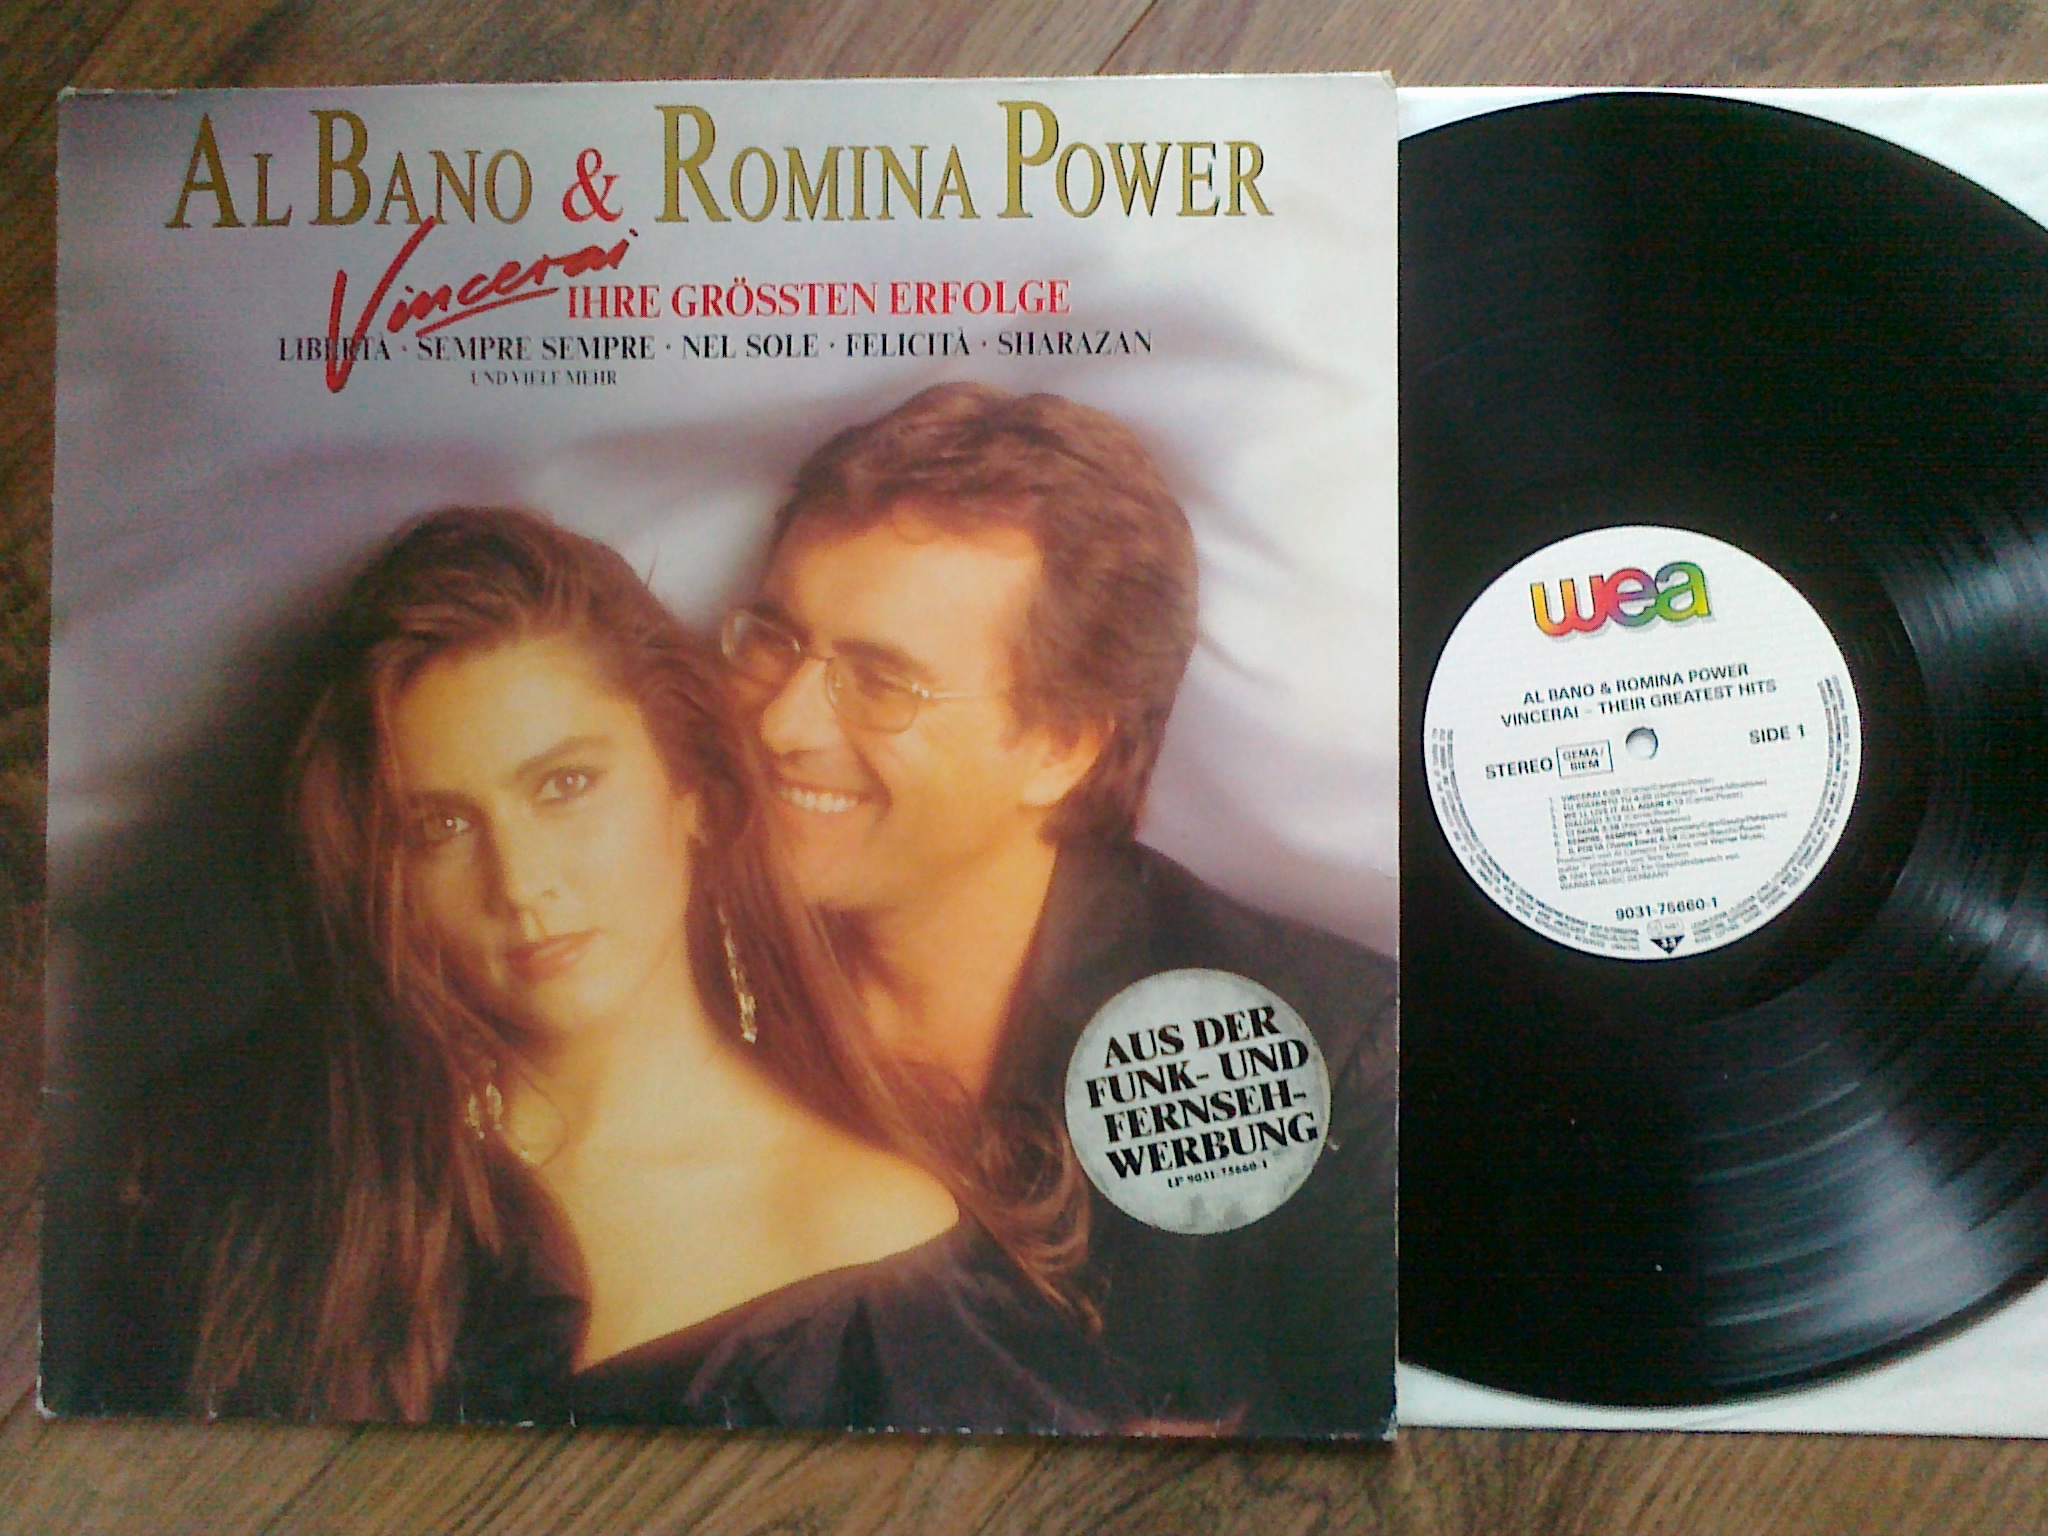 Al Bano & Romina Power - Vincerai (Their Greatest Hits)